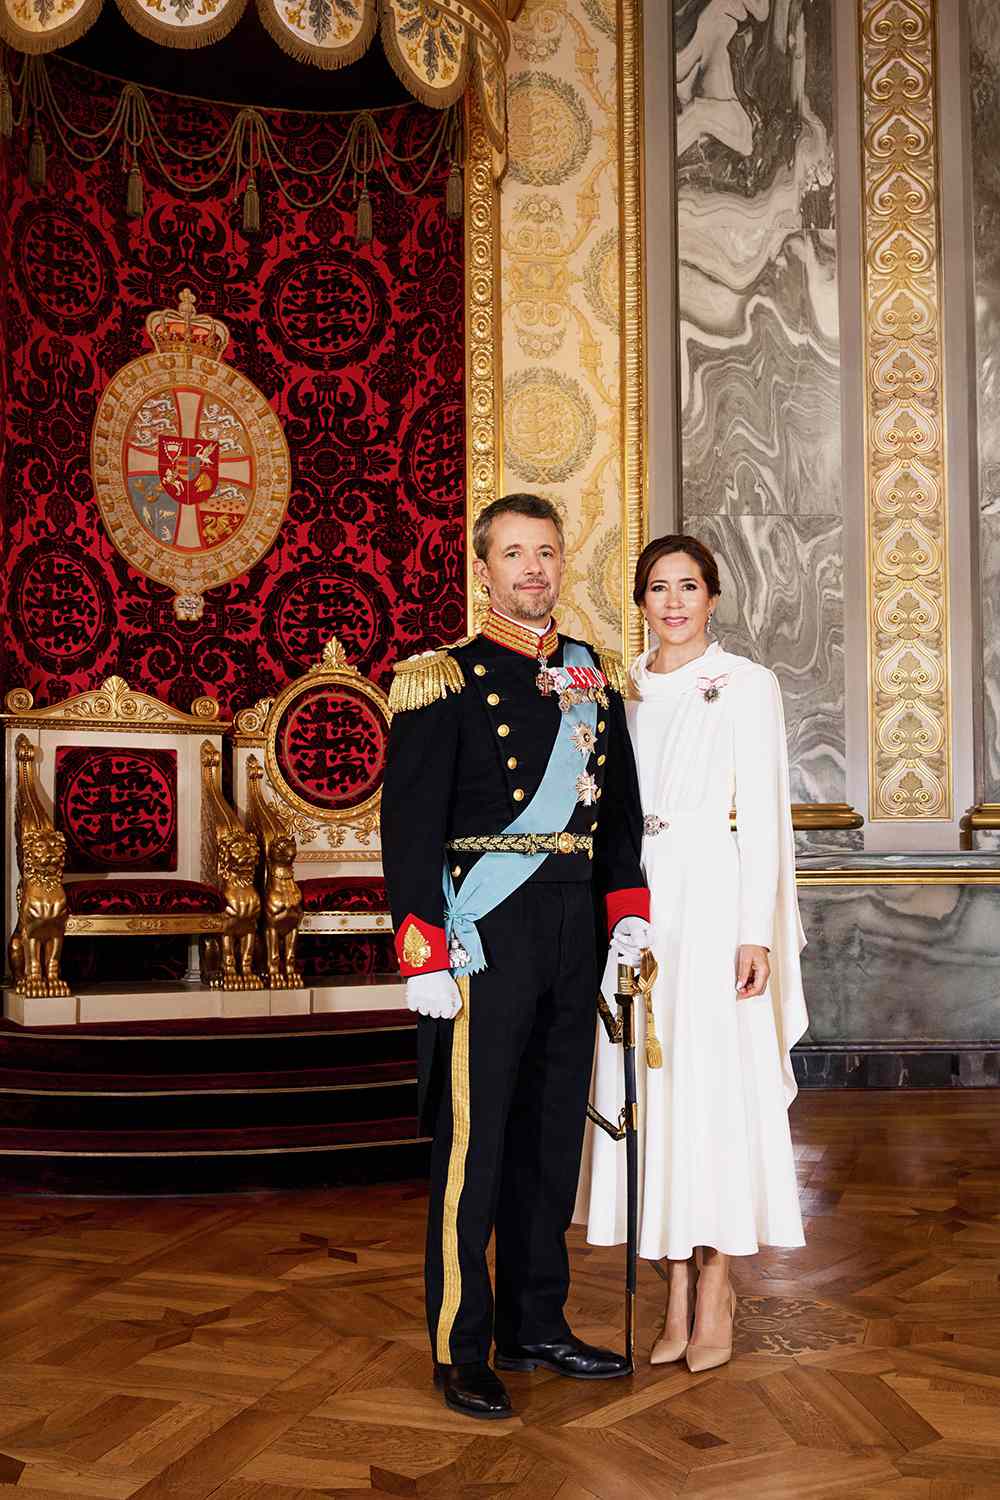 The Danish Royal Family Portraits